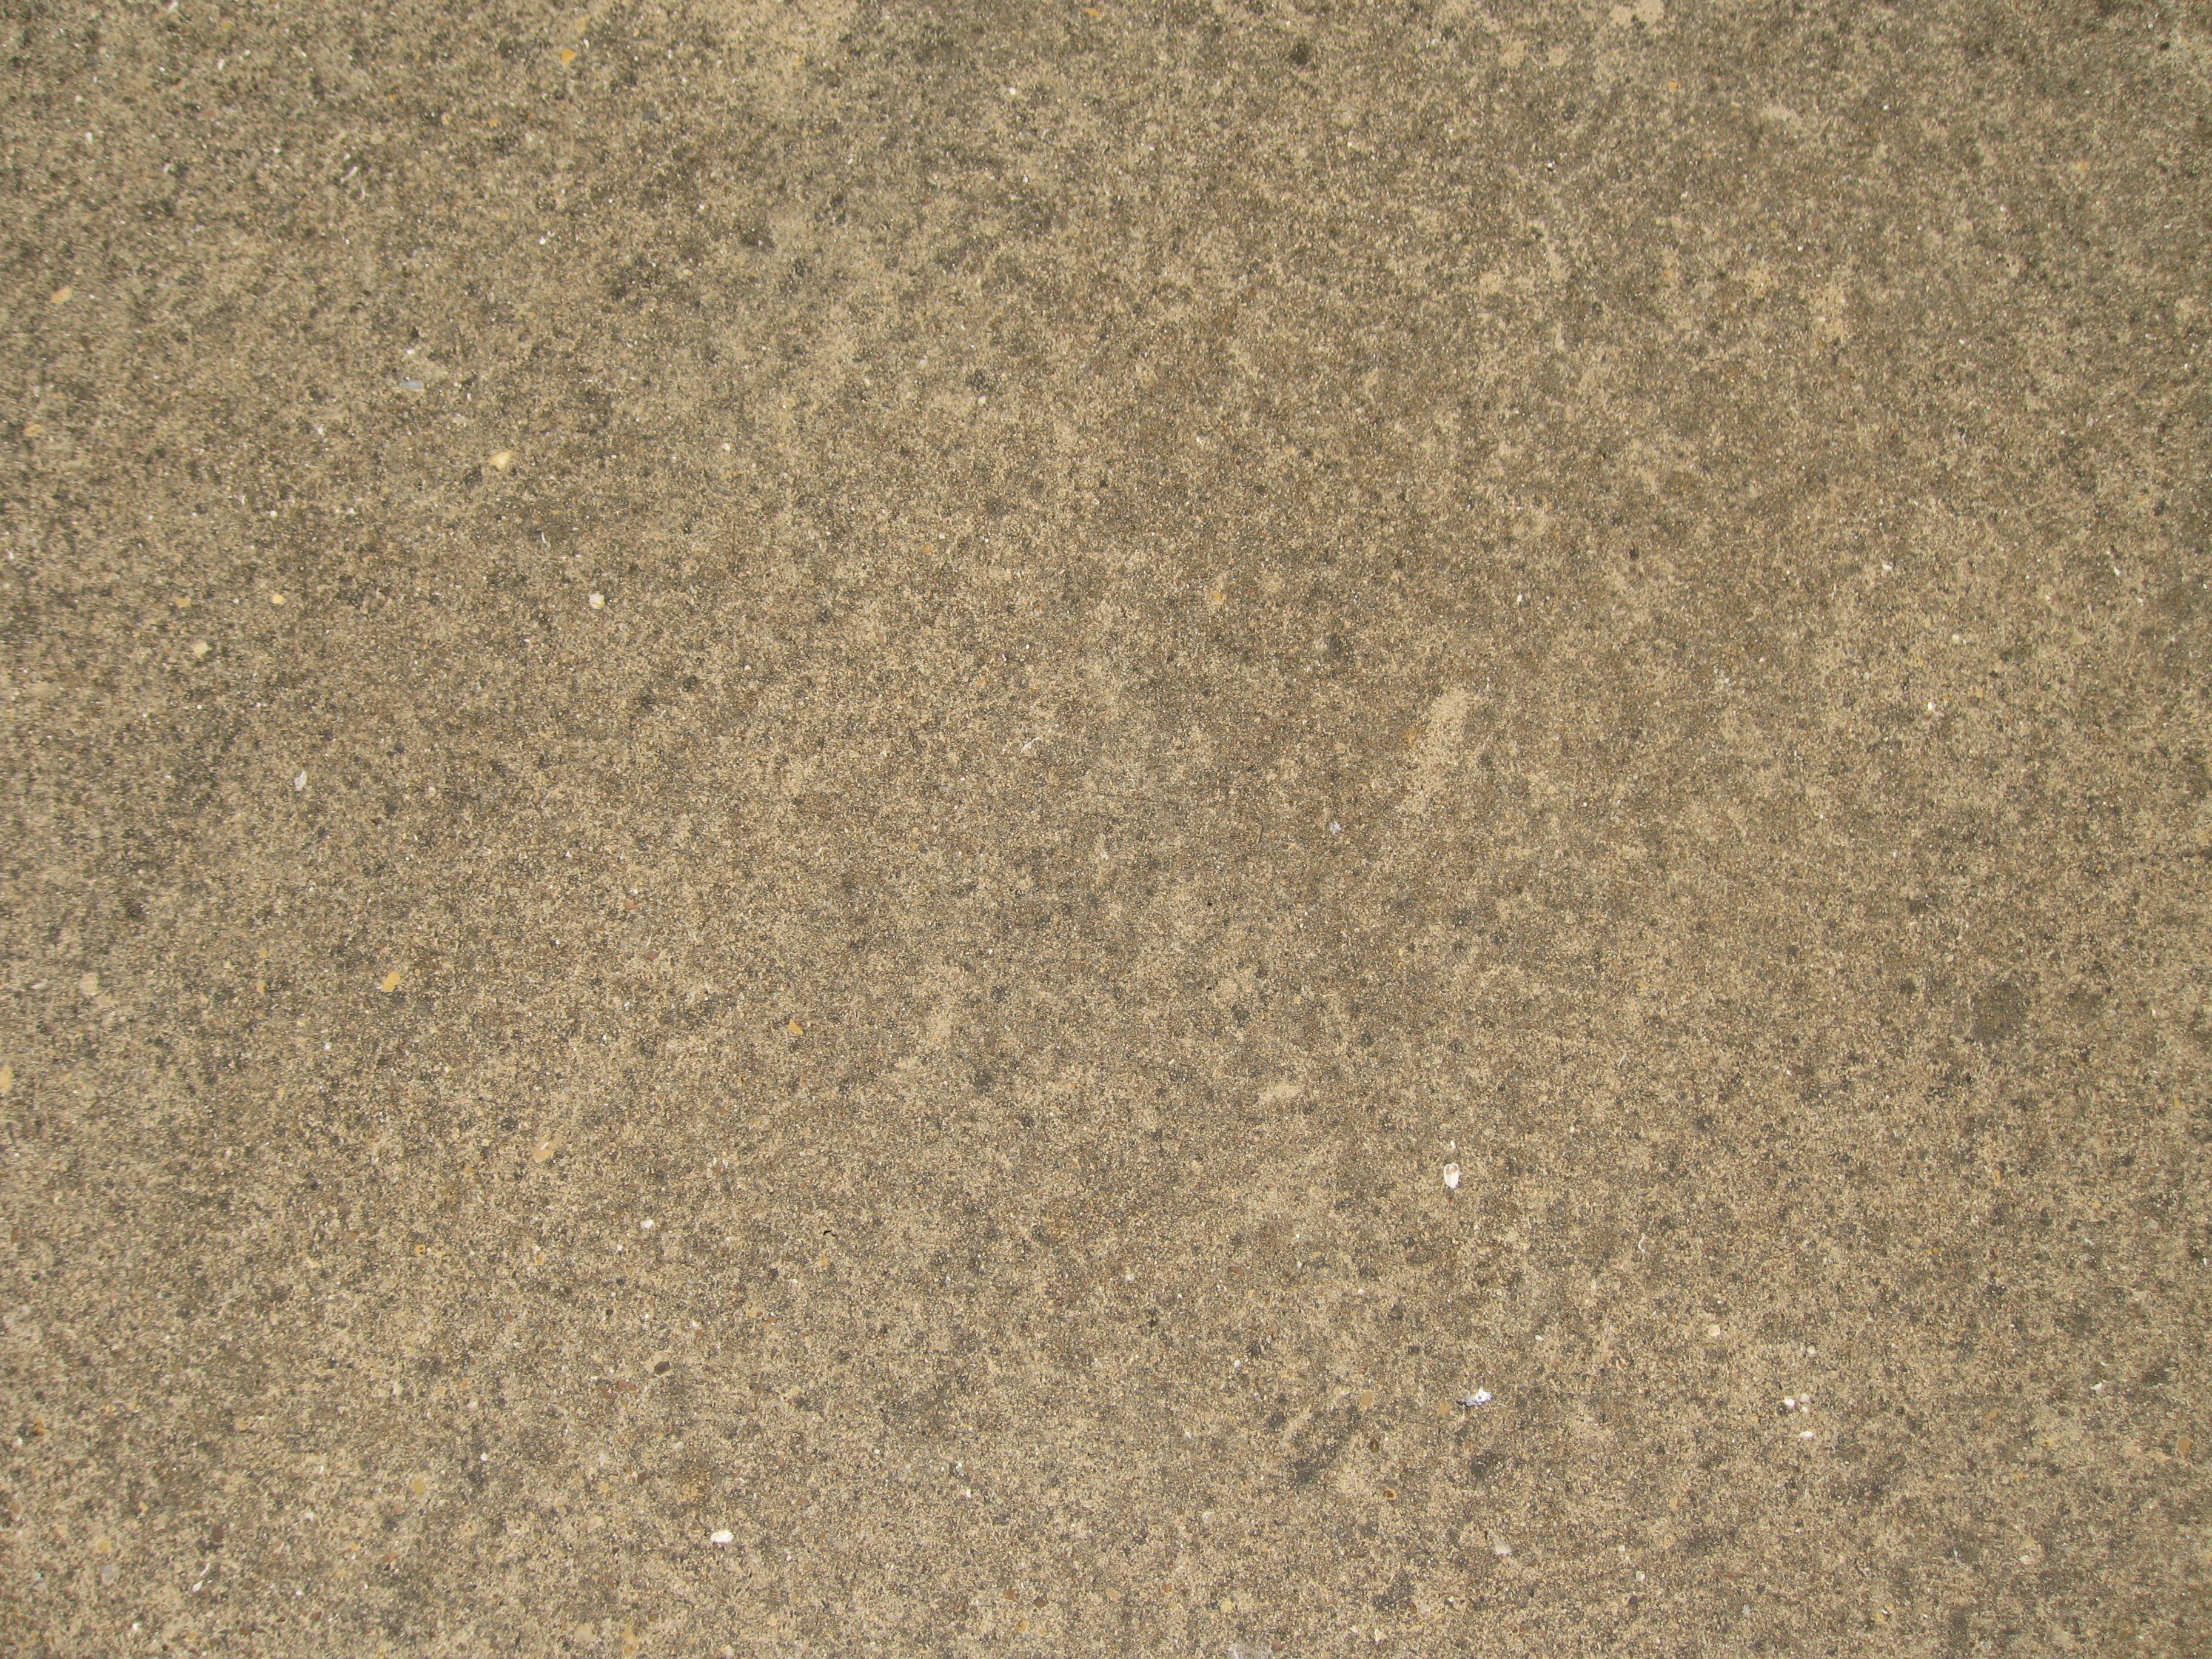 grunge tan cement stone ground - Grunge Texture For Me